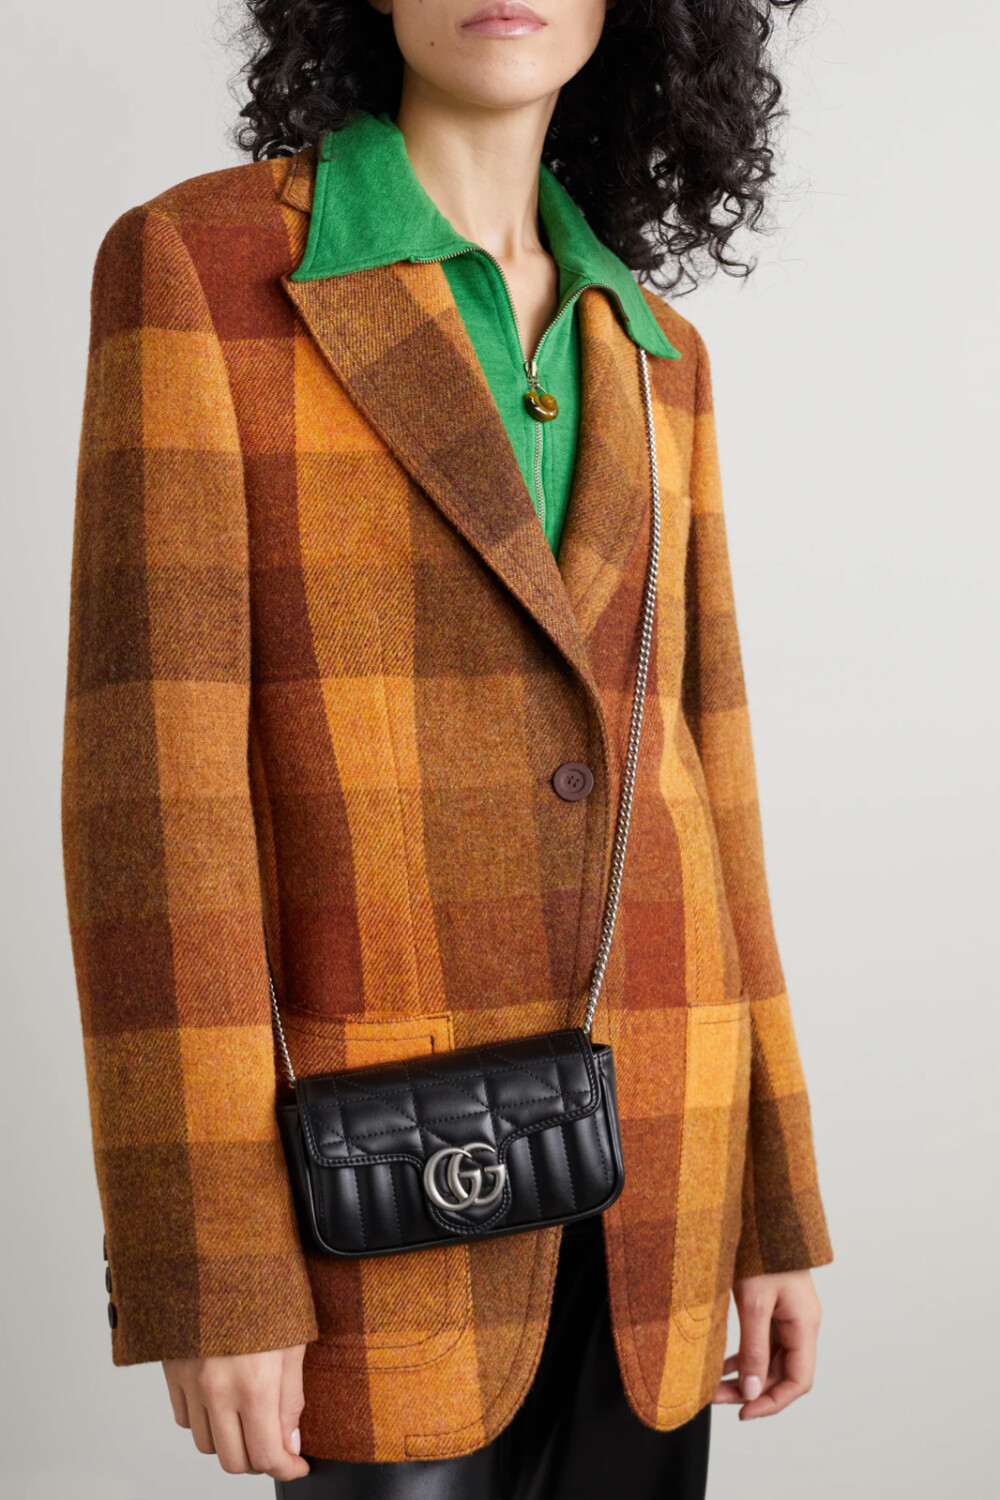 Gucci 的 “GG Marmont” 包袋家族再添一员得力“小将”，这一新款手袋虽然身量迷你，仅能容下你的随身小物，却紧跟当下小包潮流，释放出不容小觑的时髦能量。此单品诞生于意大利，以绗缝皮革制成，饰有品牌标志性的饰牌，链条肩带还能对折缩短。不妨以银色珠宝呼应包身上的五金装饰。